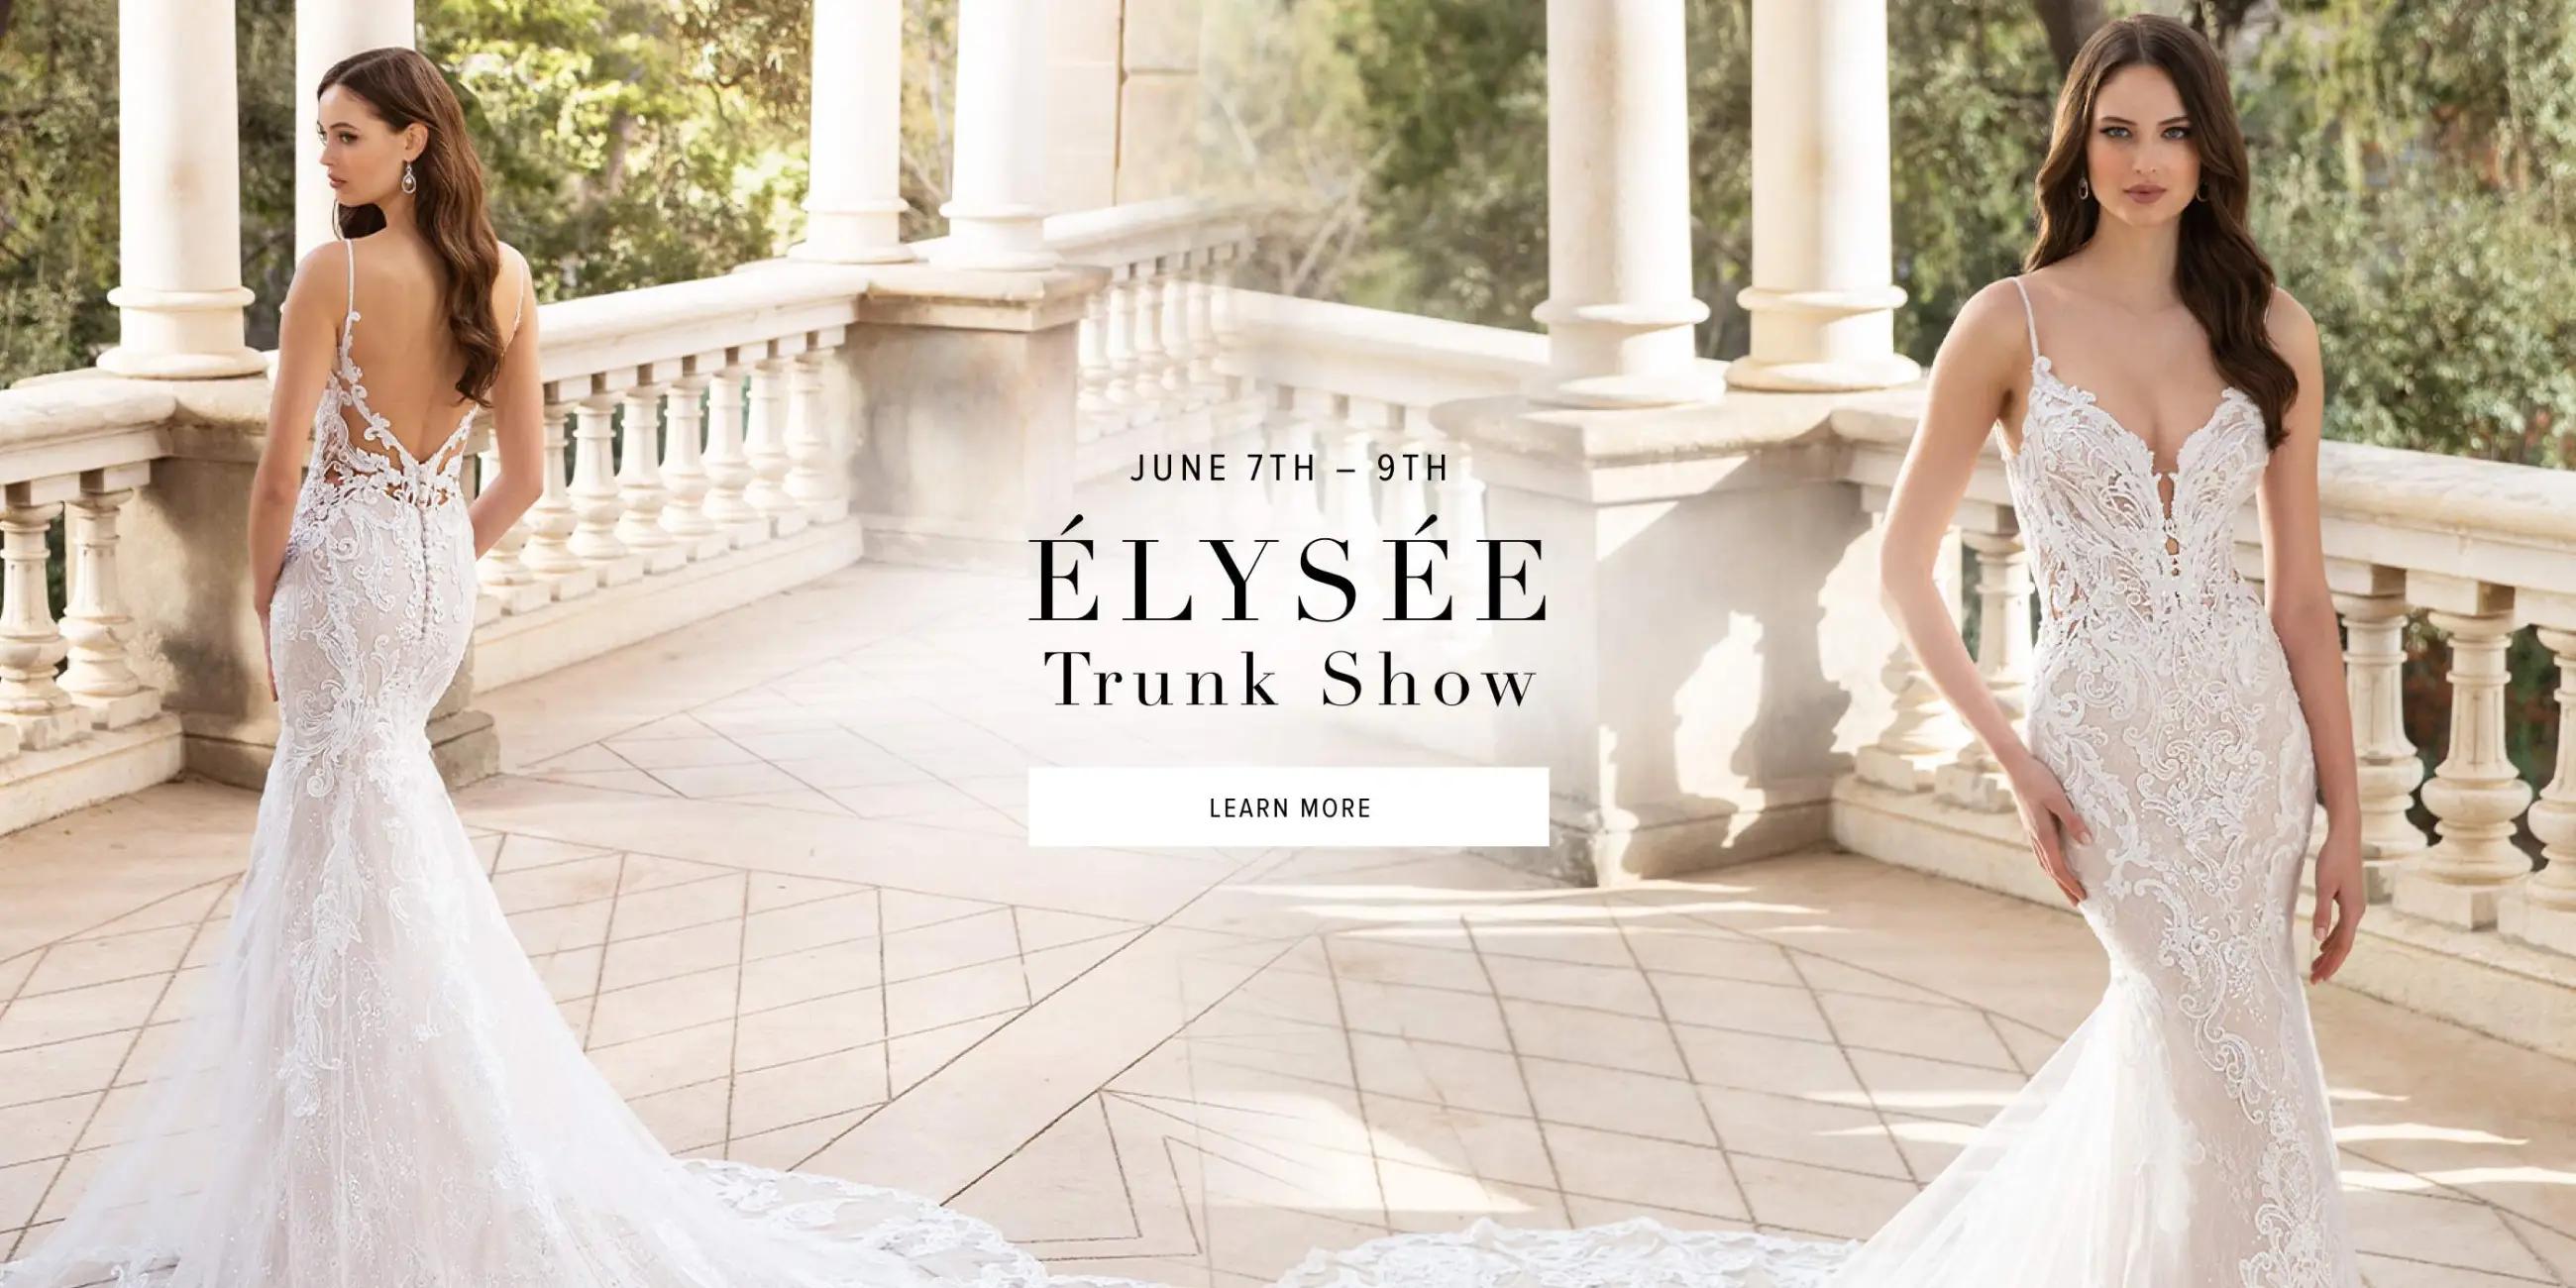 Elysee Trunk Show Desktop banner